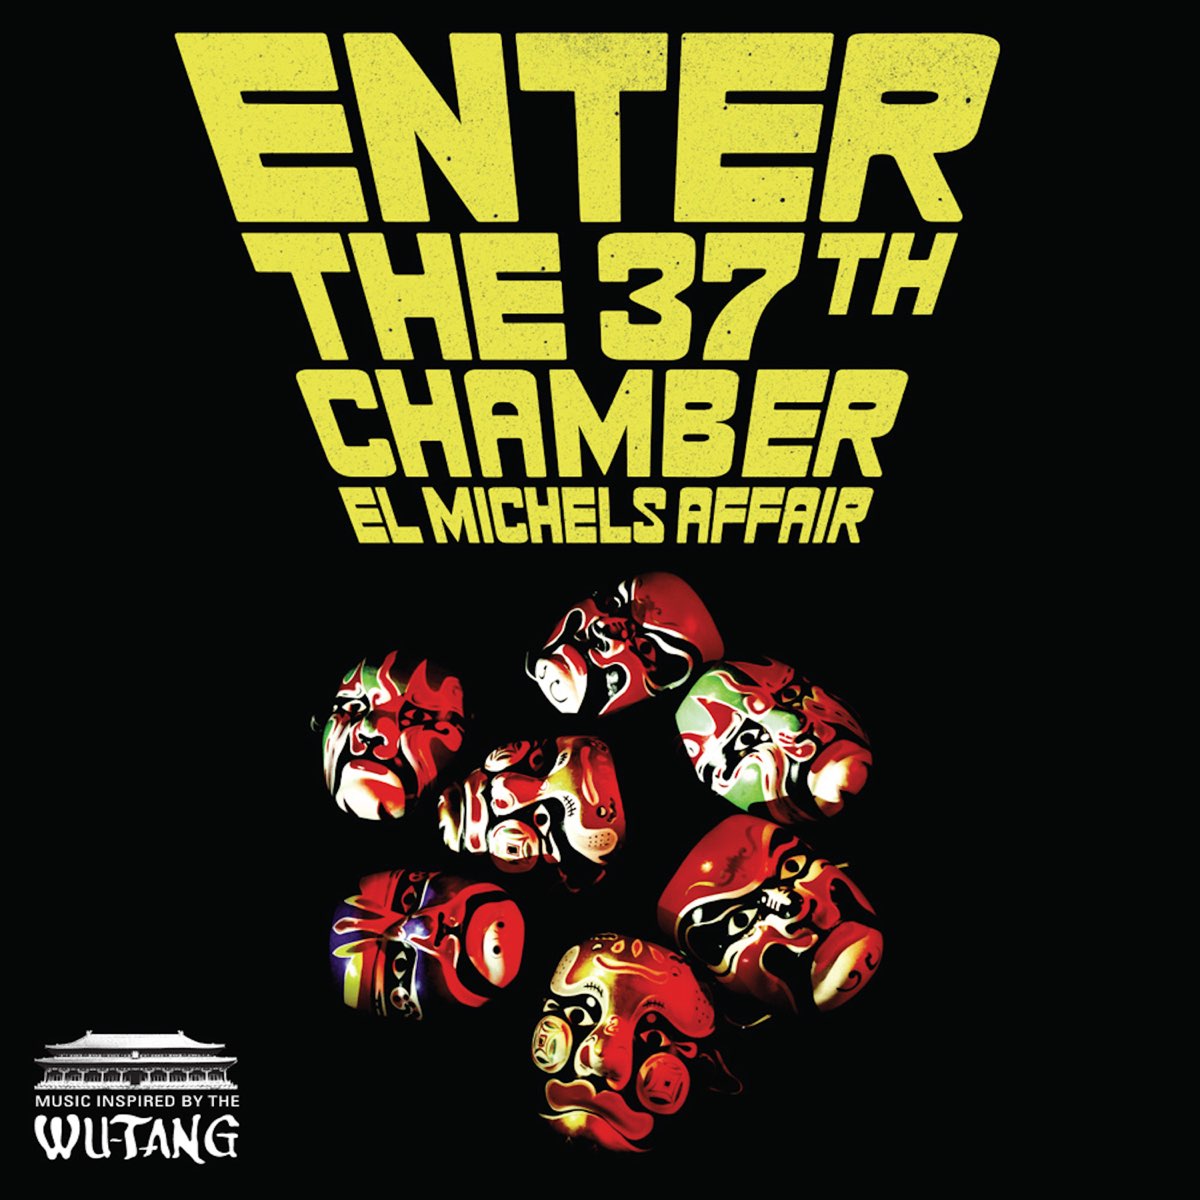 El Michels Affair  - Enter the 37th Chamber 15h Ann.  (Yellow & Black Vinyl LP)